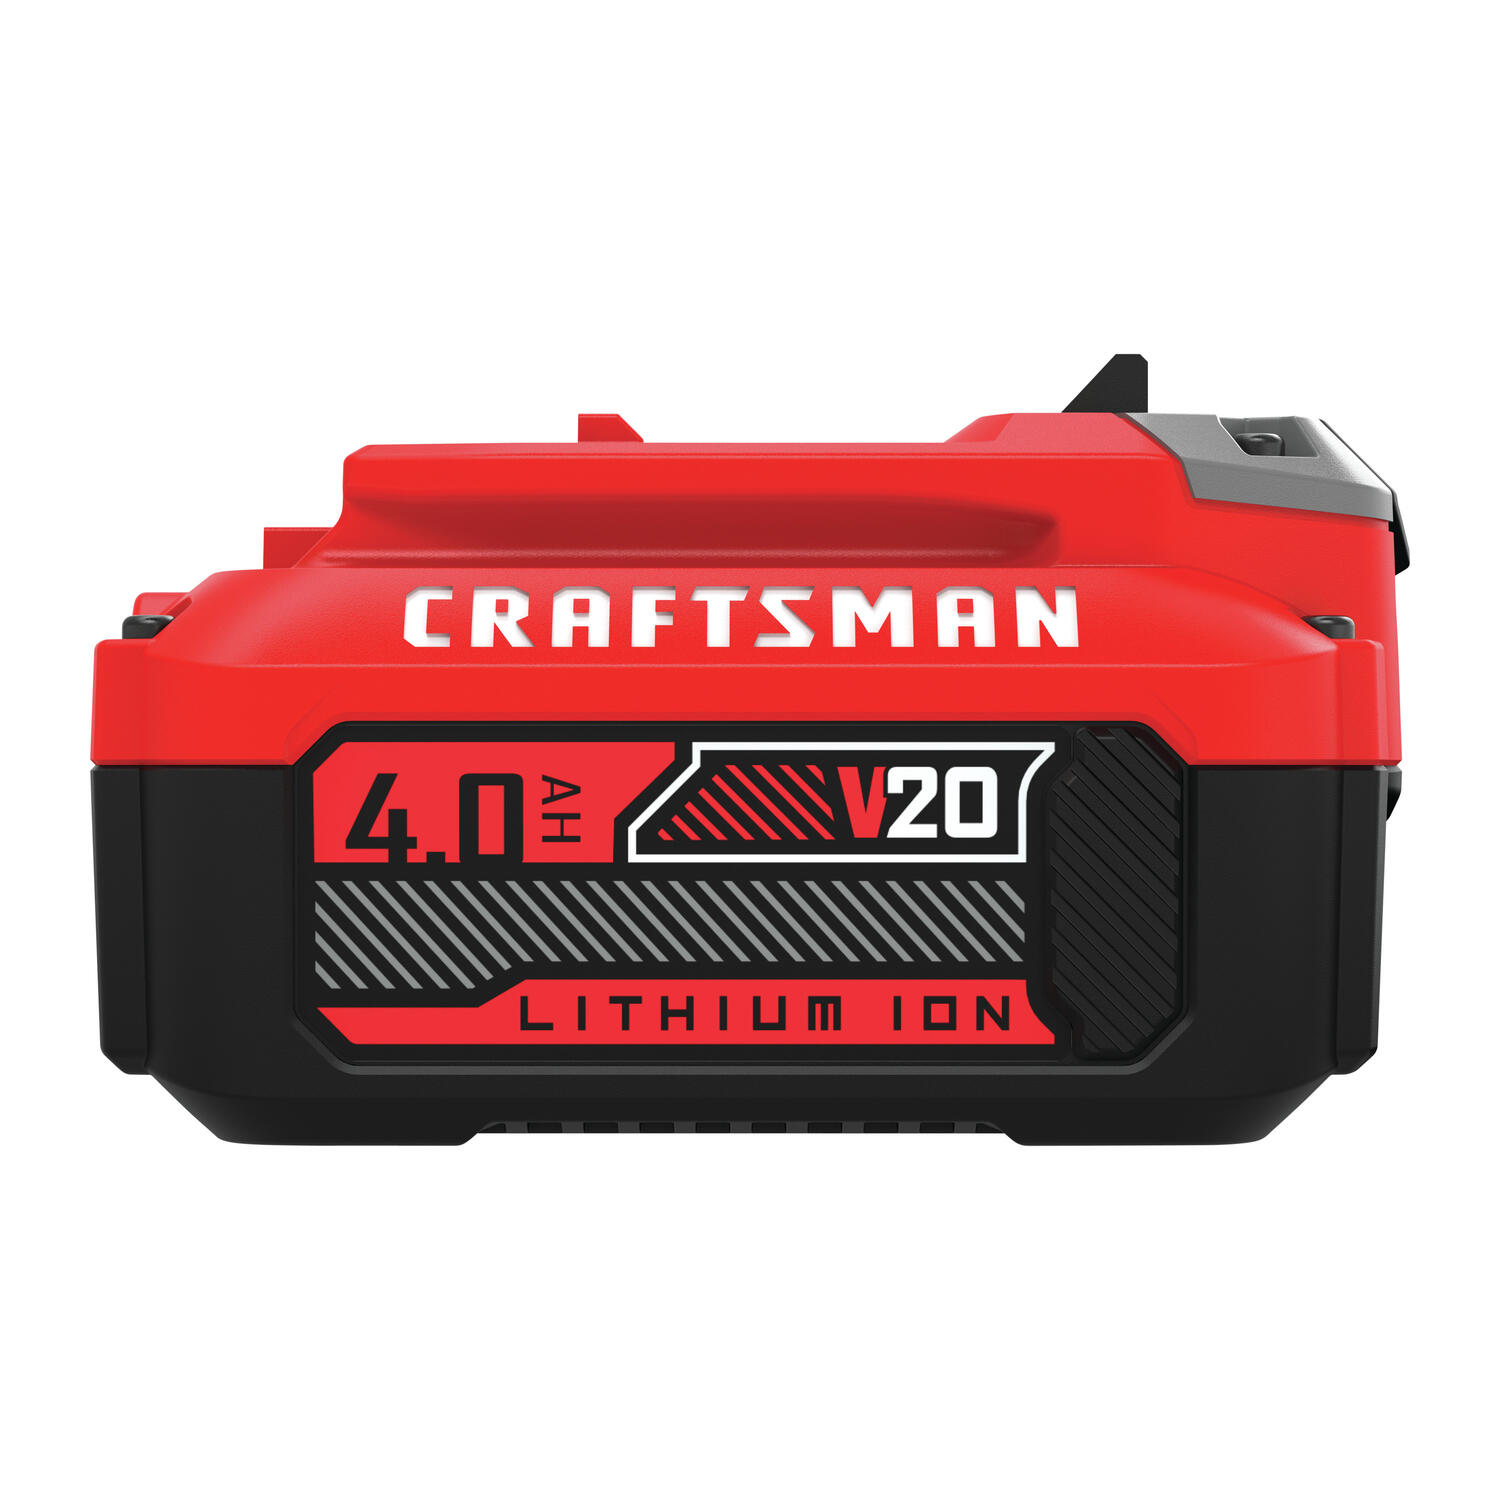 Craftsman V20 20 V 4 Ah Lithium-Ion High Capacity Battery 2 pc - Ace Hardware $79